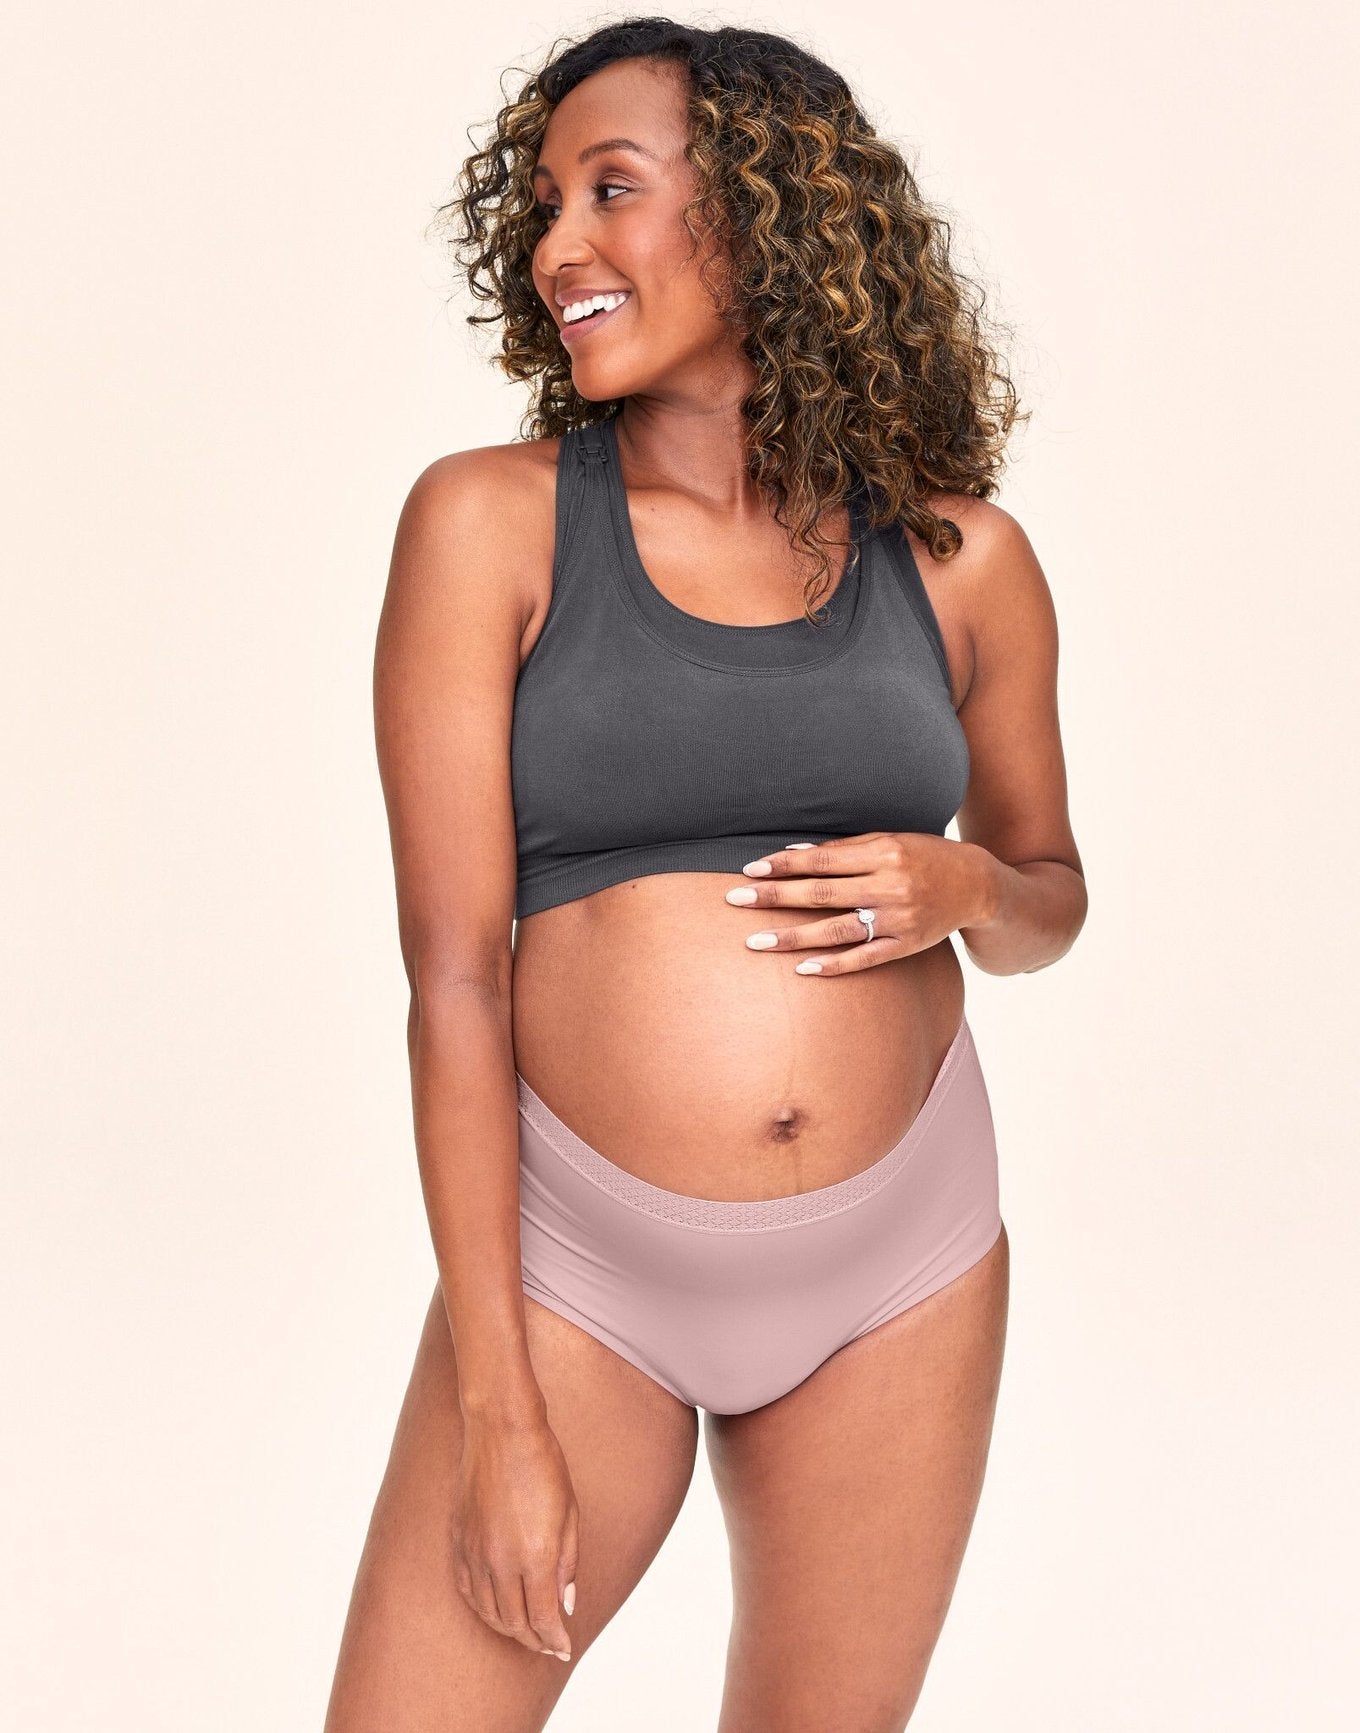 Maternity Brief Underwear, Light-Moderate Absorbency